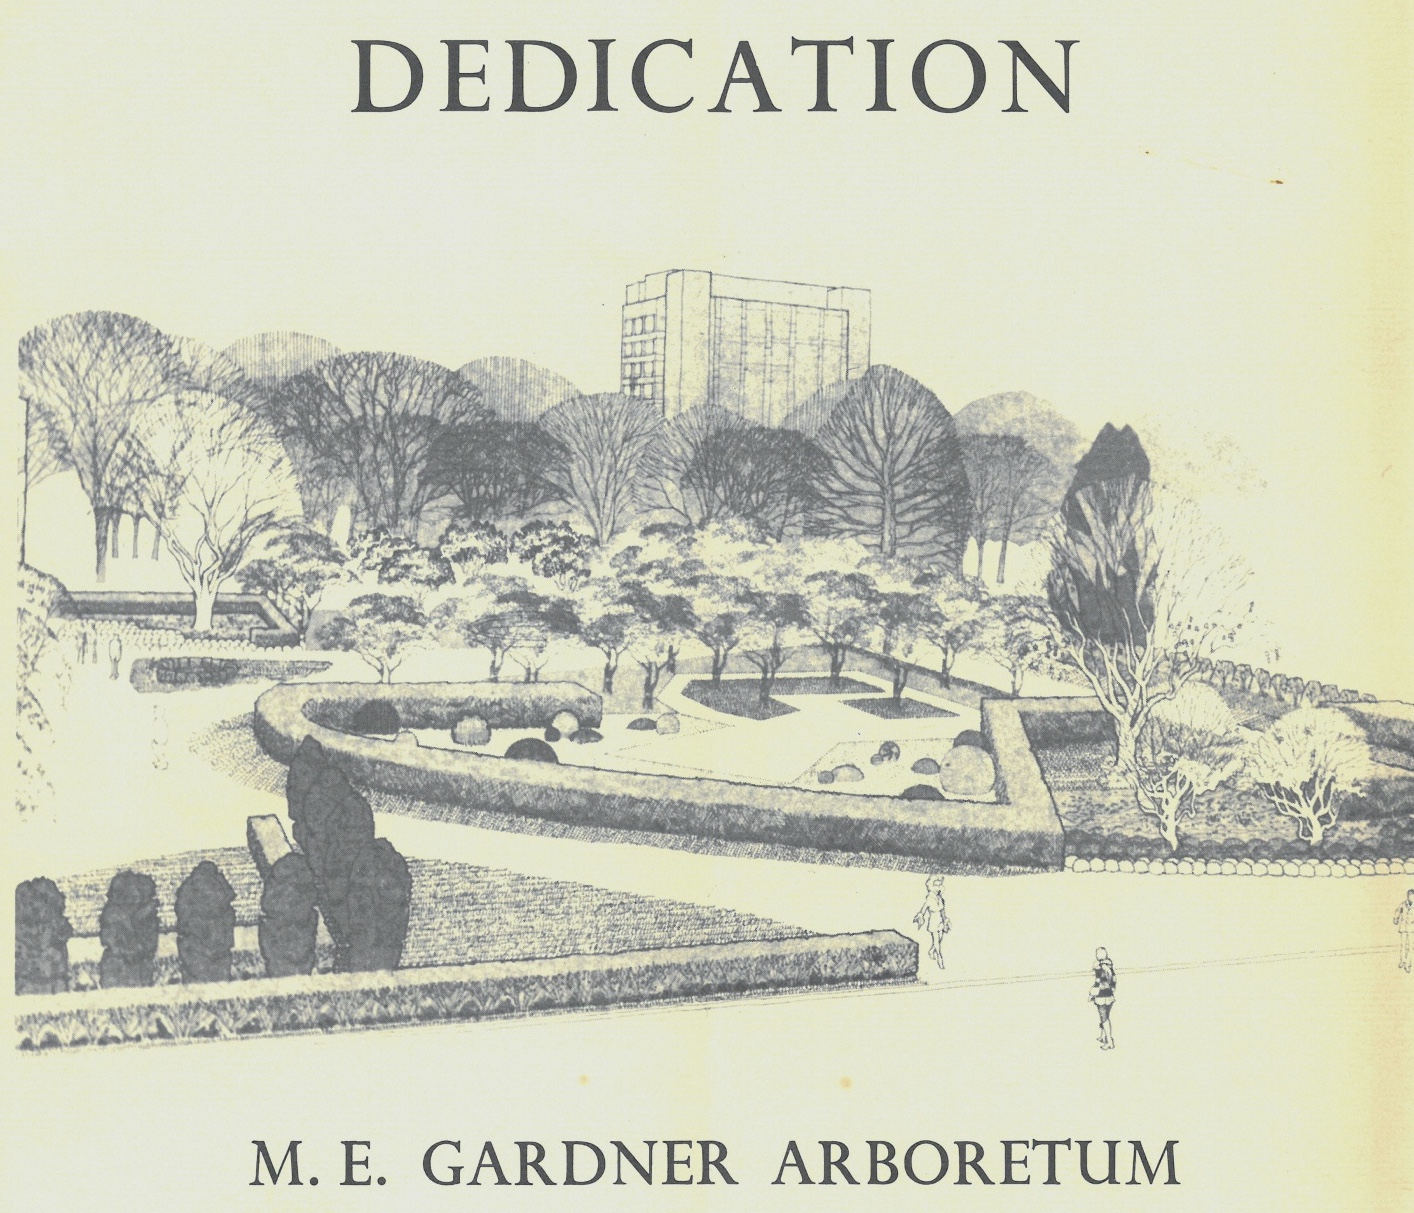 dedication program